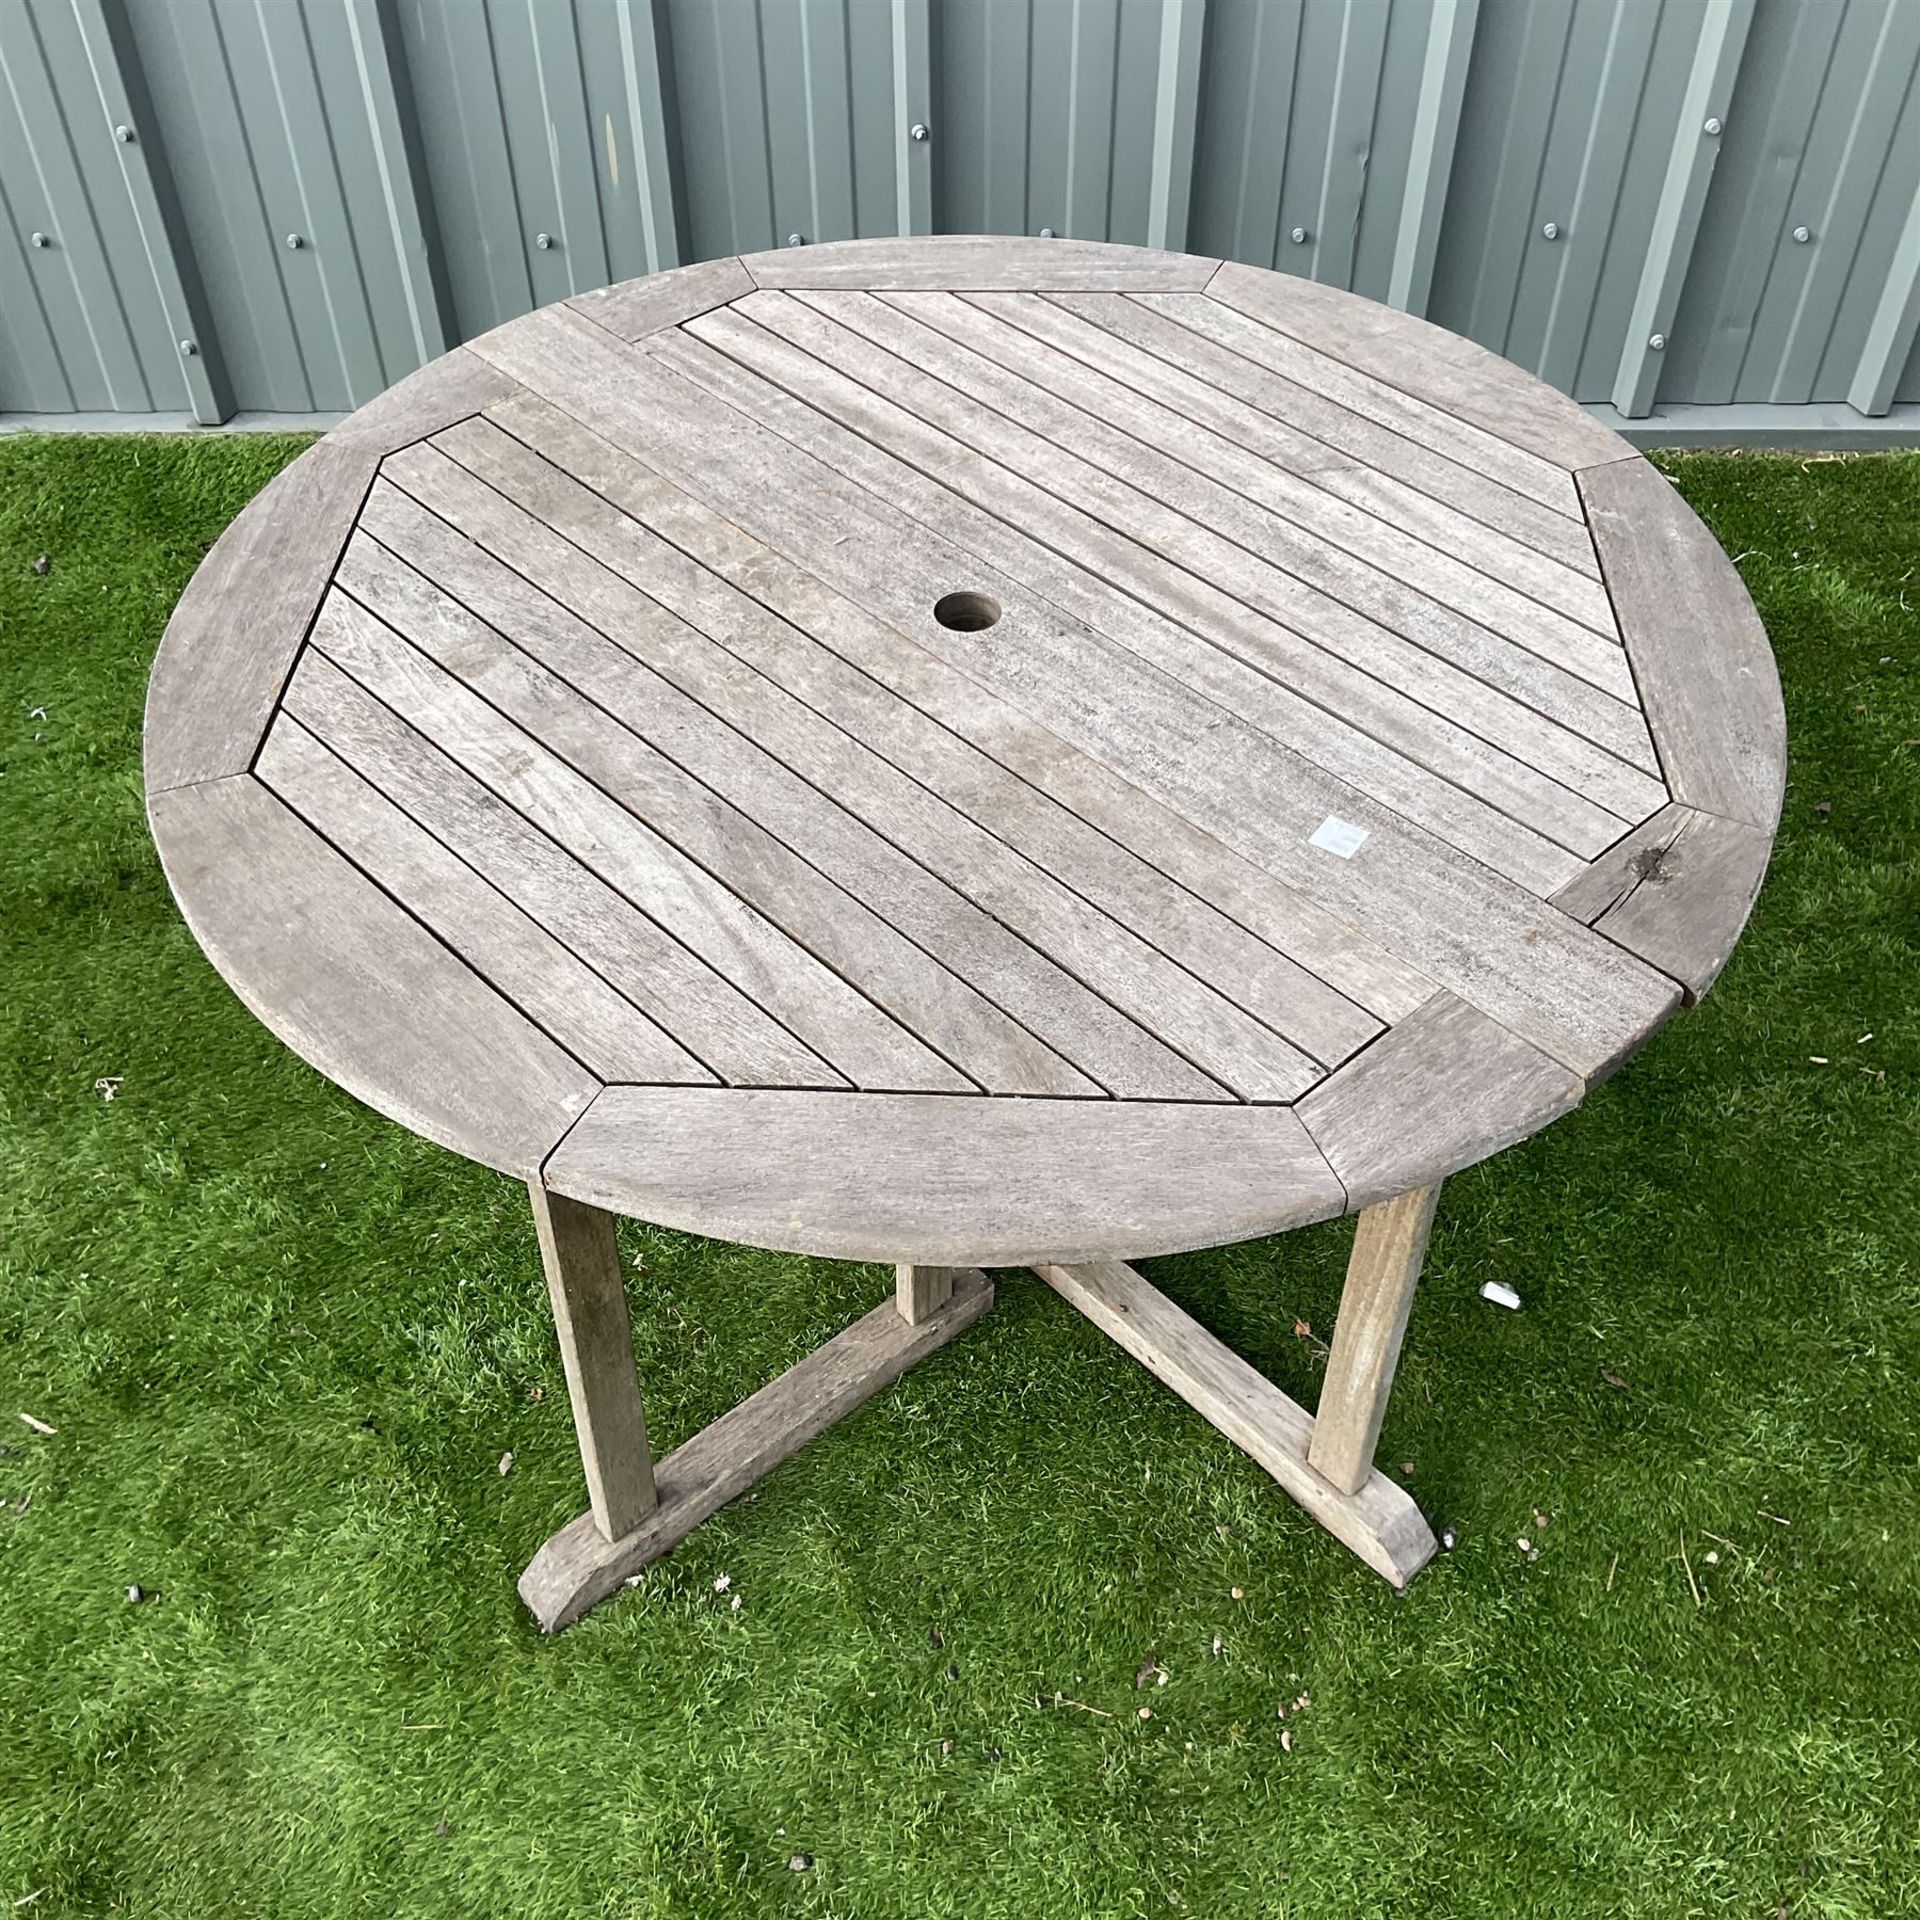 Teak circular drop leaf garden table - Image 2 of 3